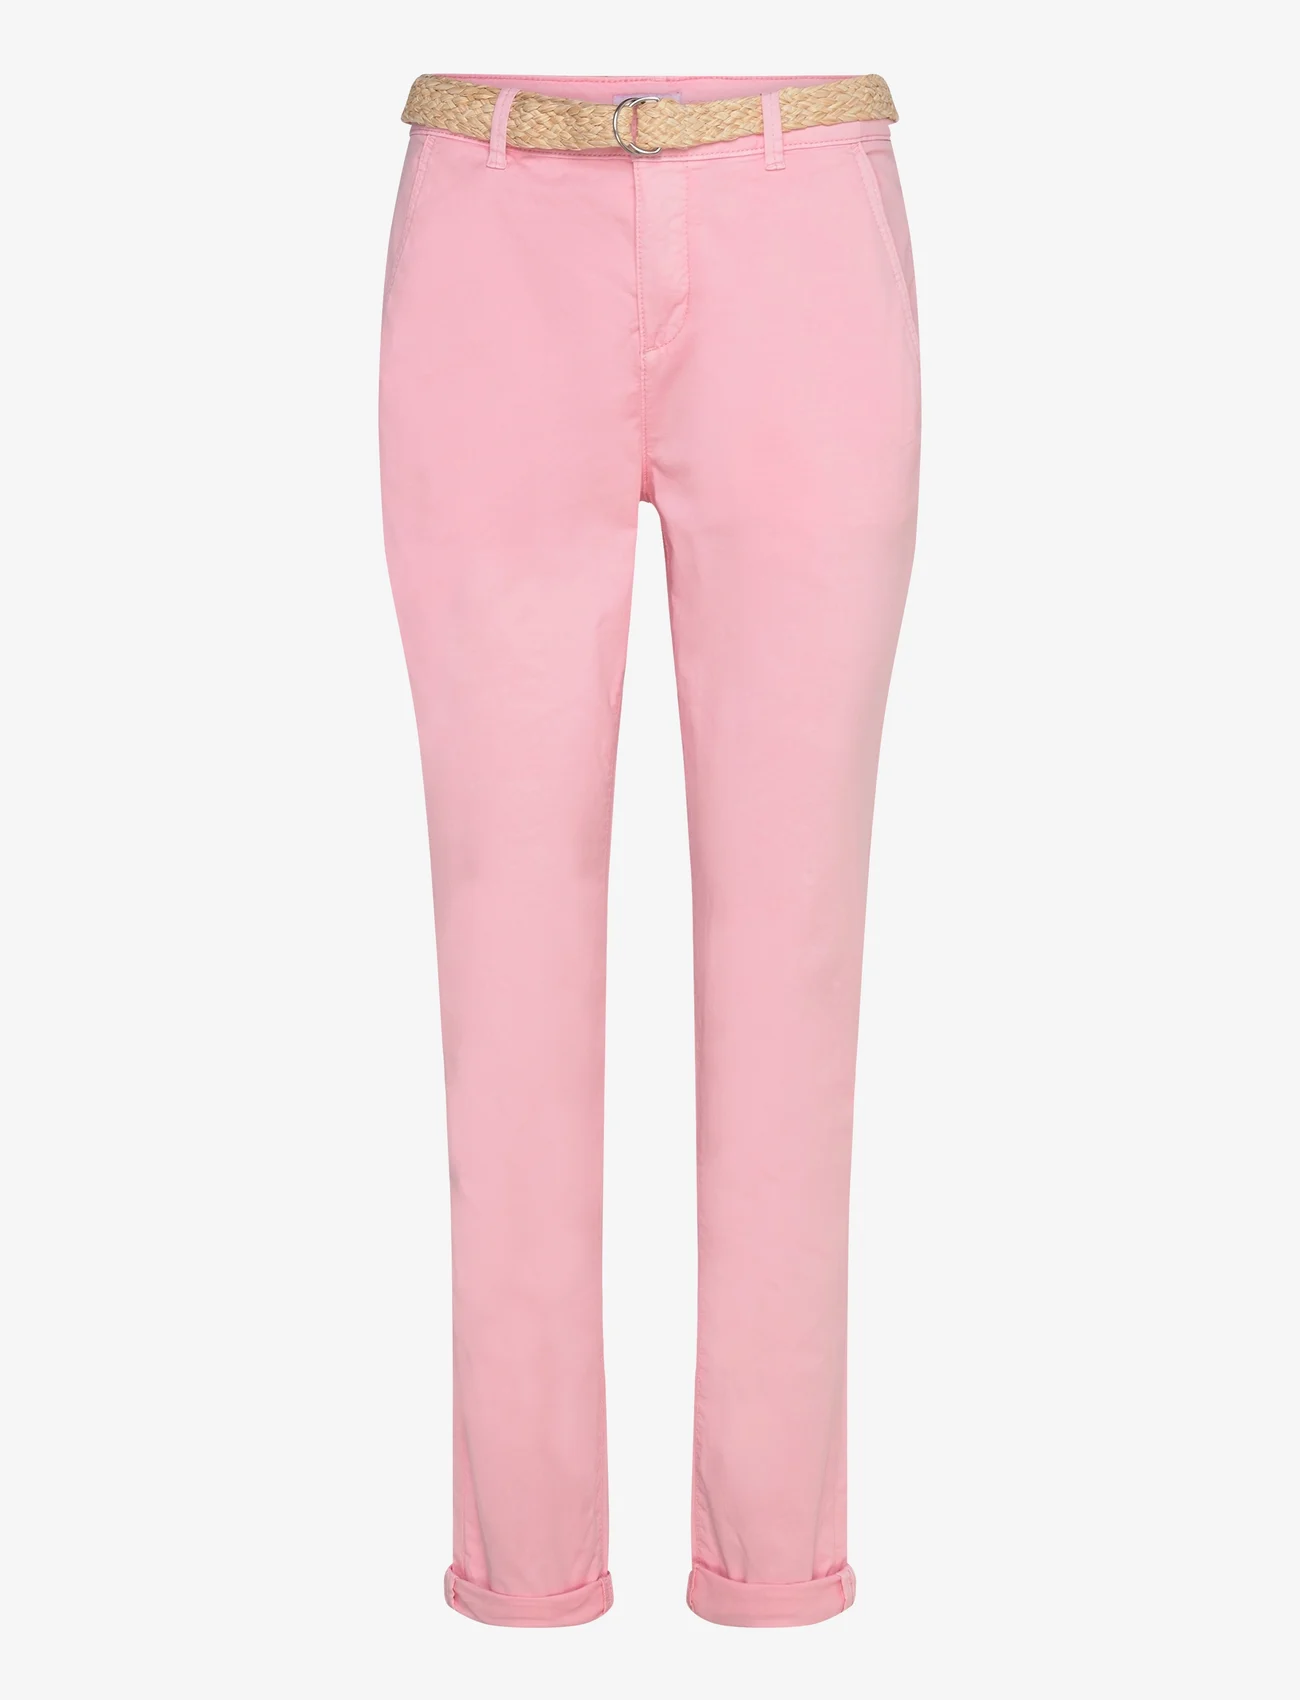 Esprit Casual - Cropped chinos - chino stila bikses - pastel pink - 0